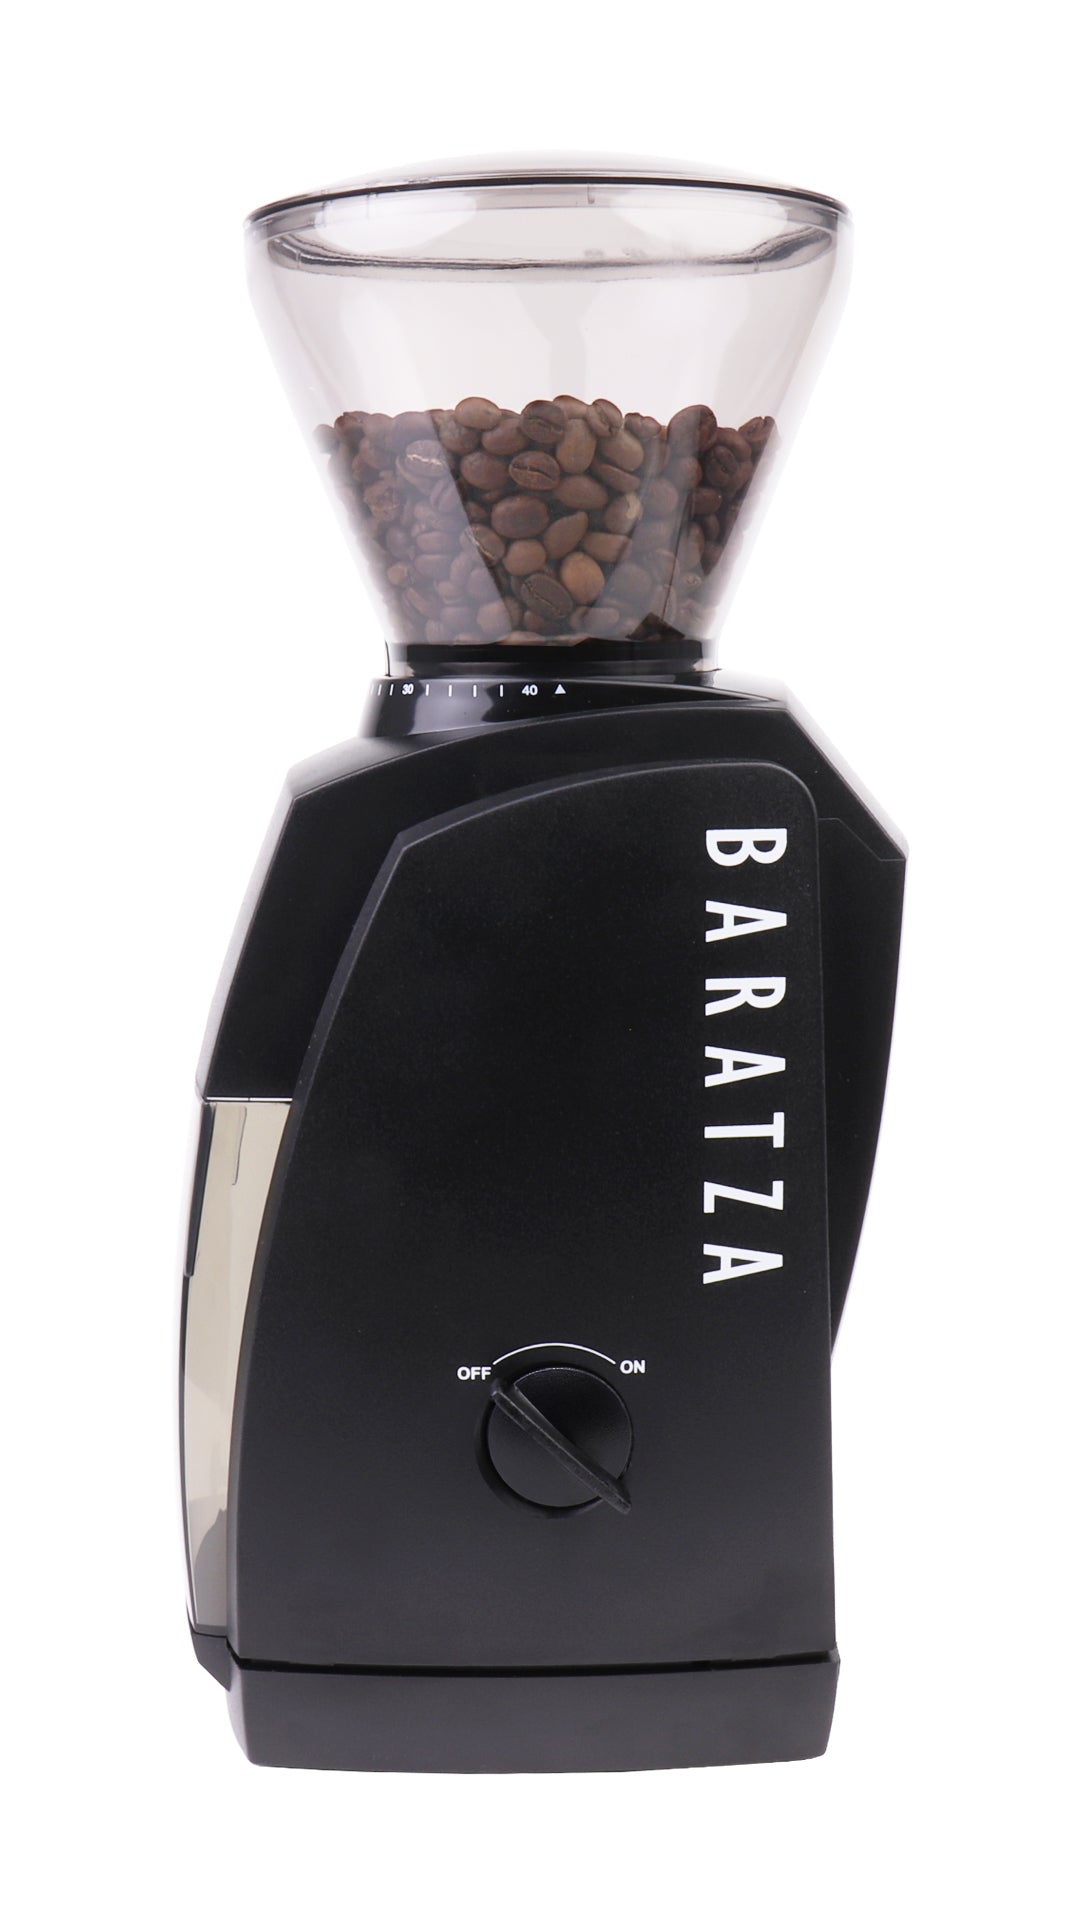 Baratza Encore Burr Coffee Grinder - Black